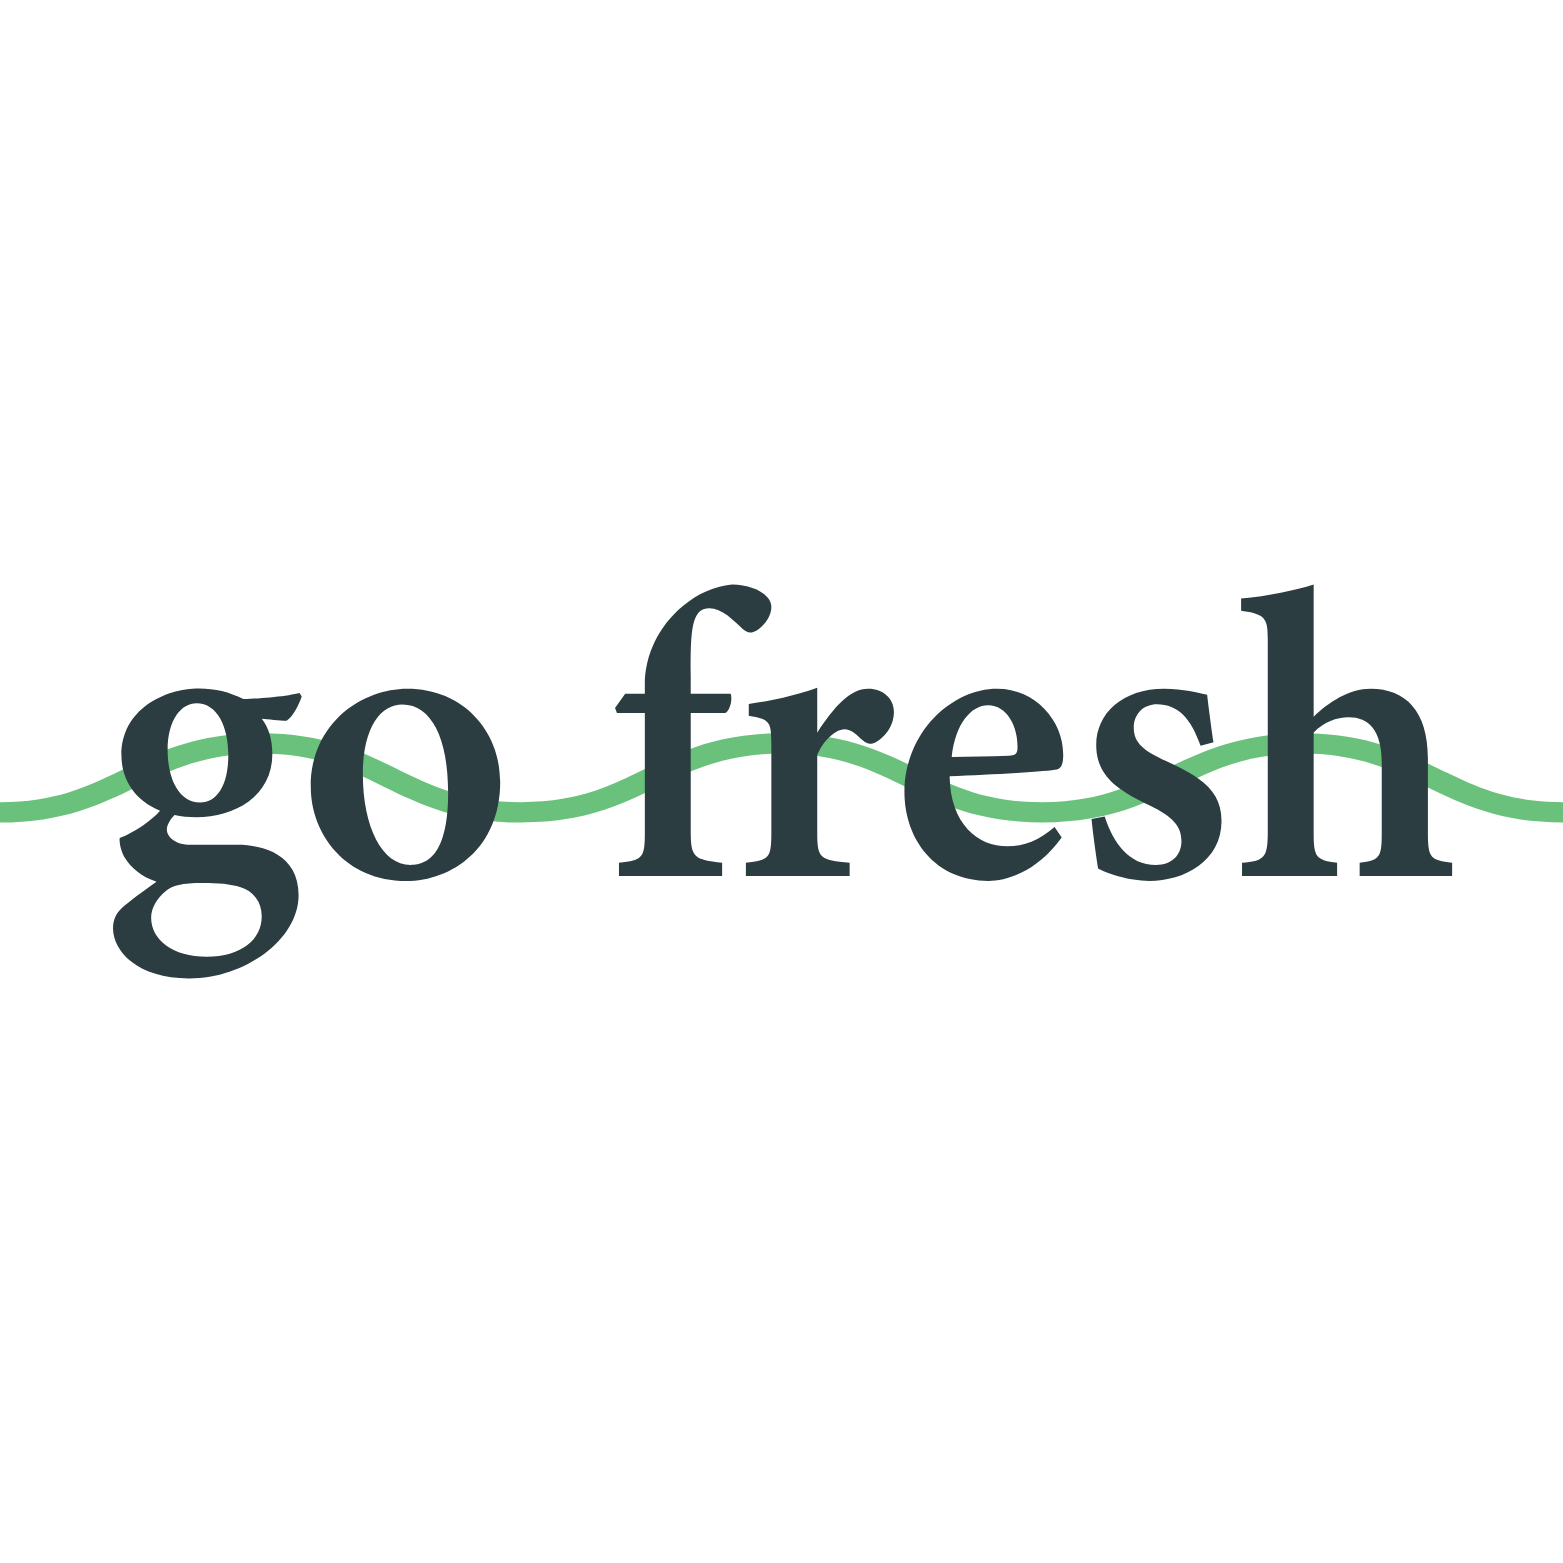 Go Fresh